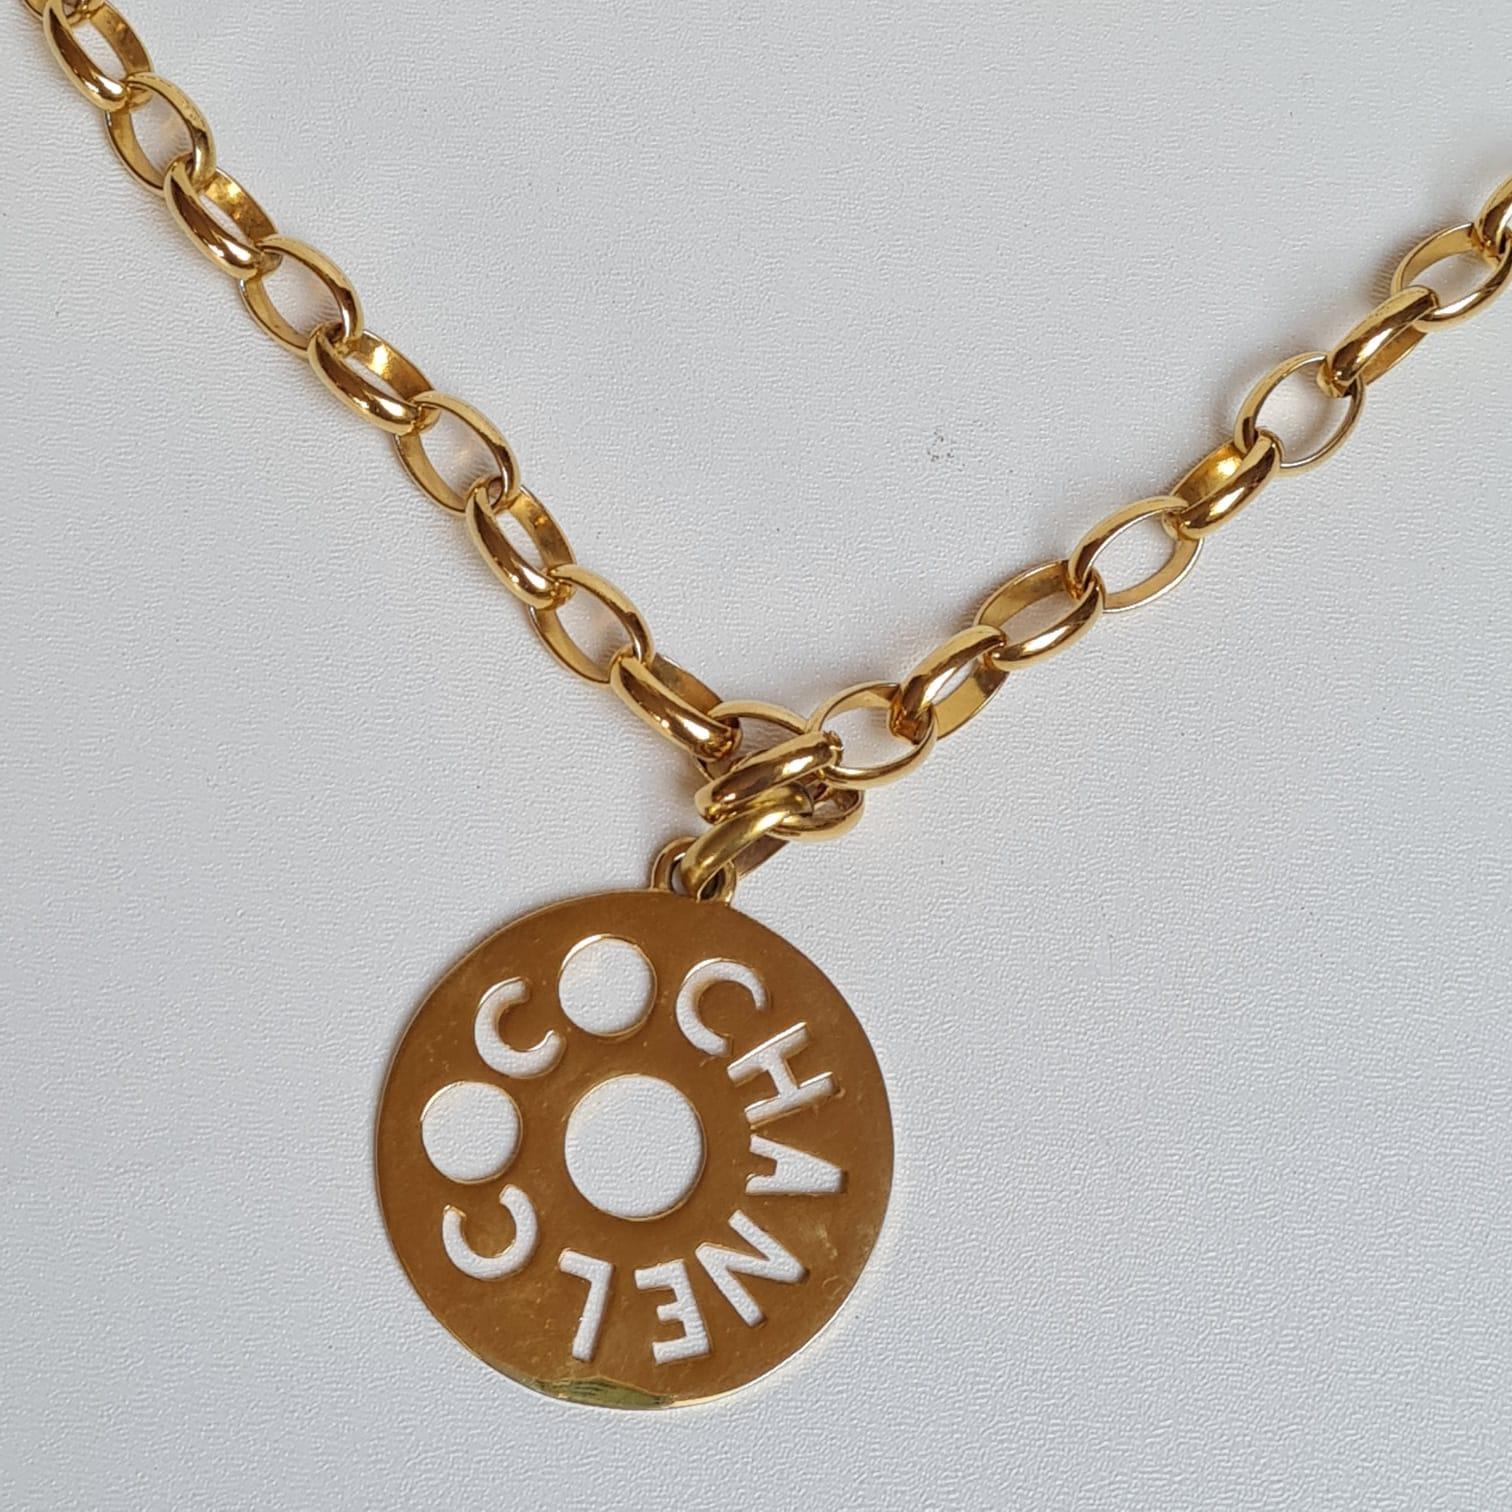 Rare chanel logo cut out pendant necklace. 